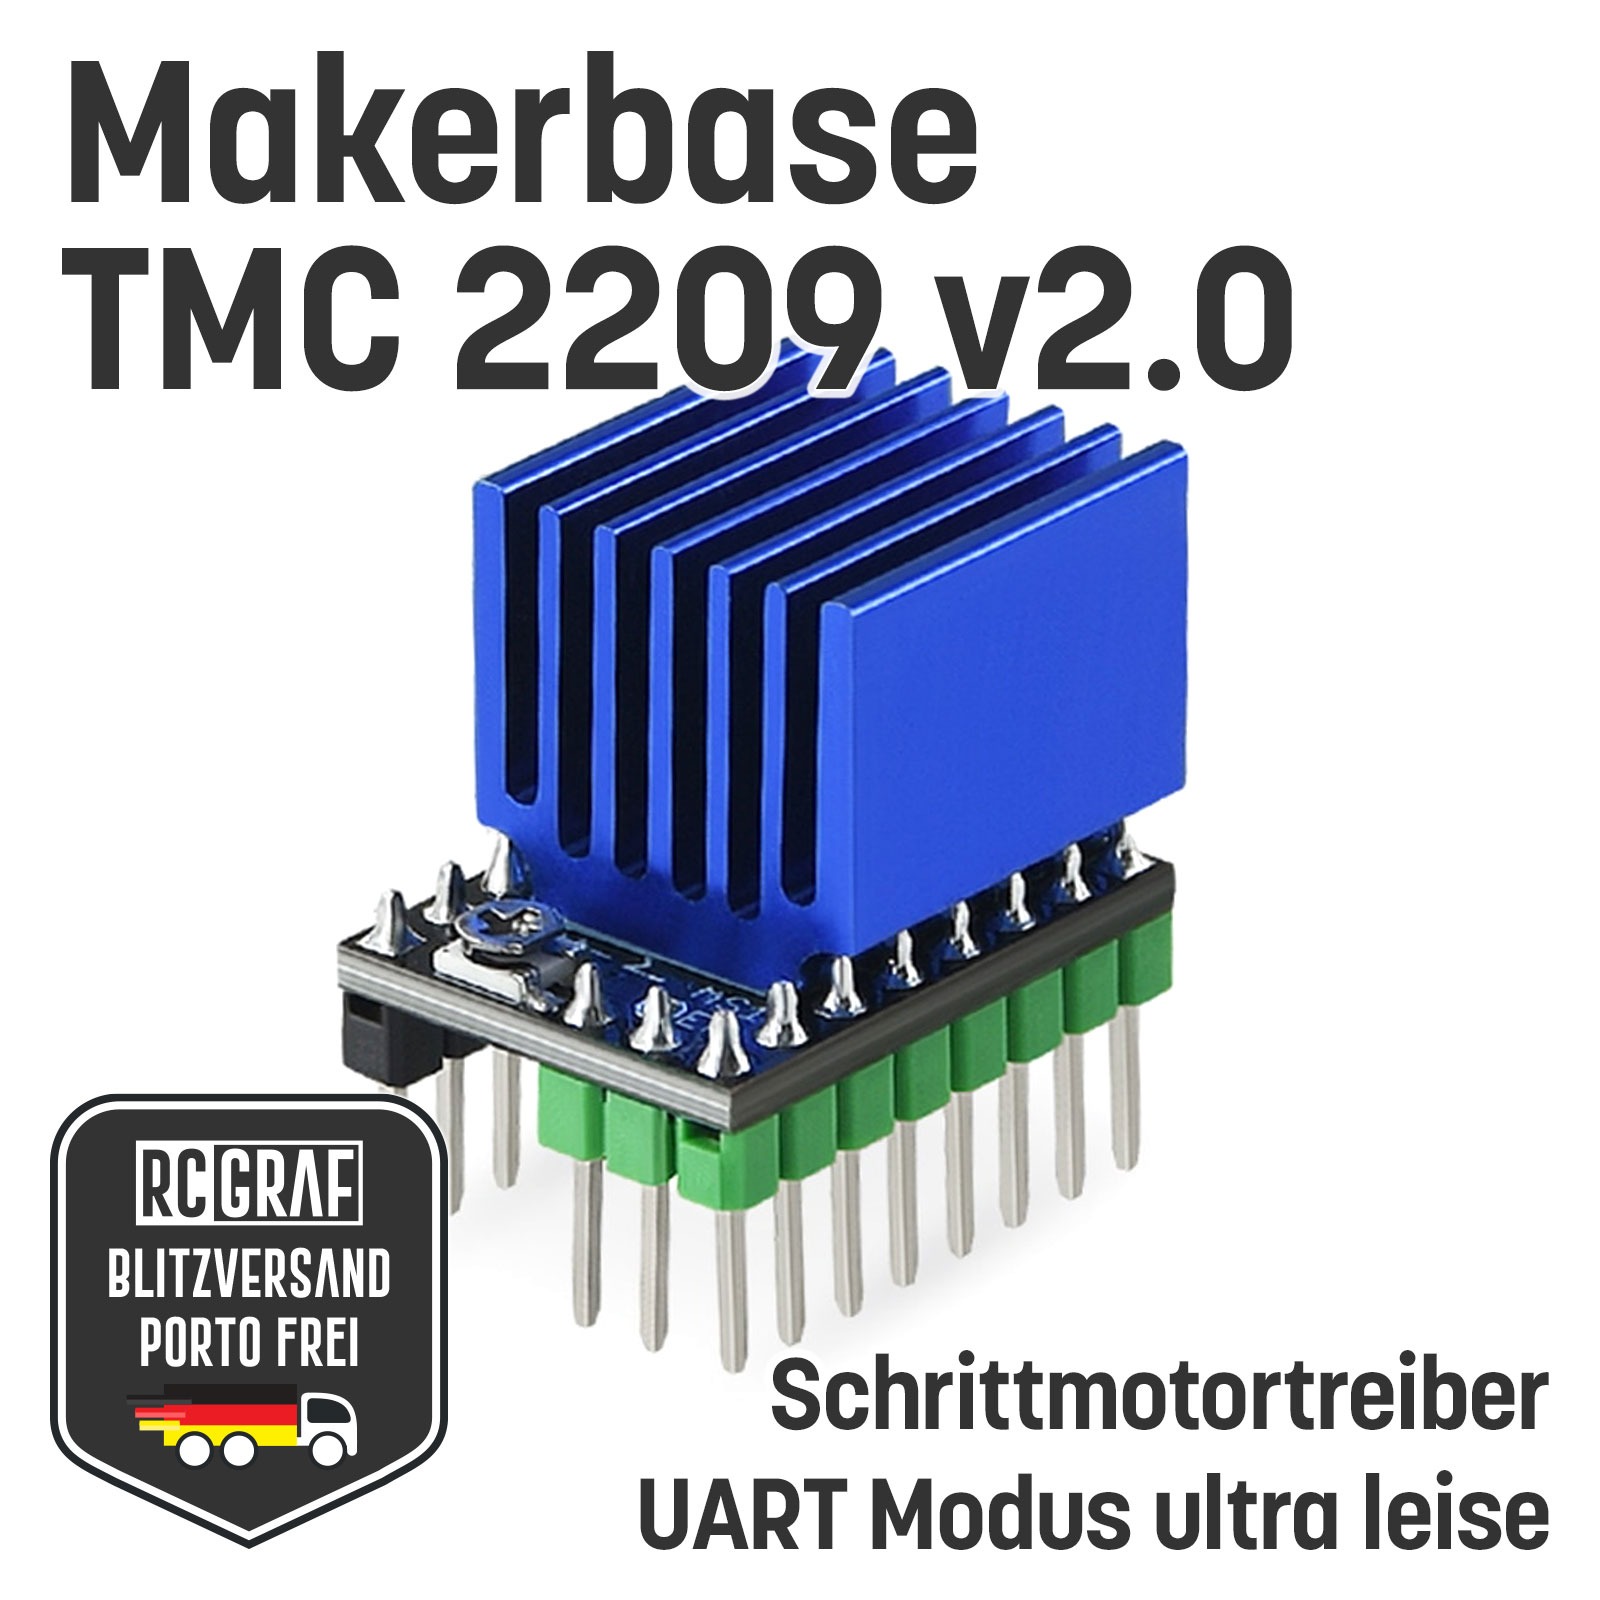 Makerbase TMC2209 V2.0 Schrittmotortreiber UART Modus ultra leise 6